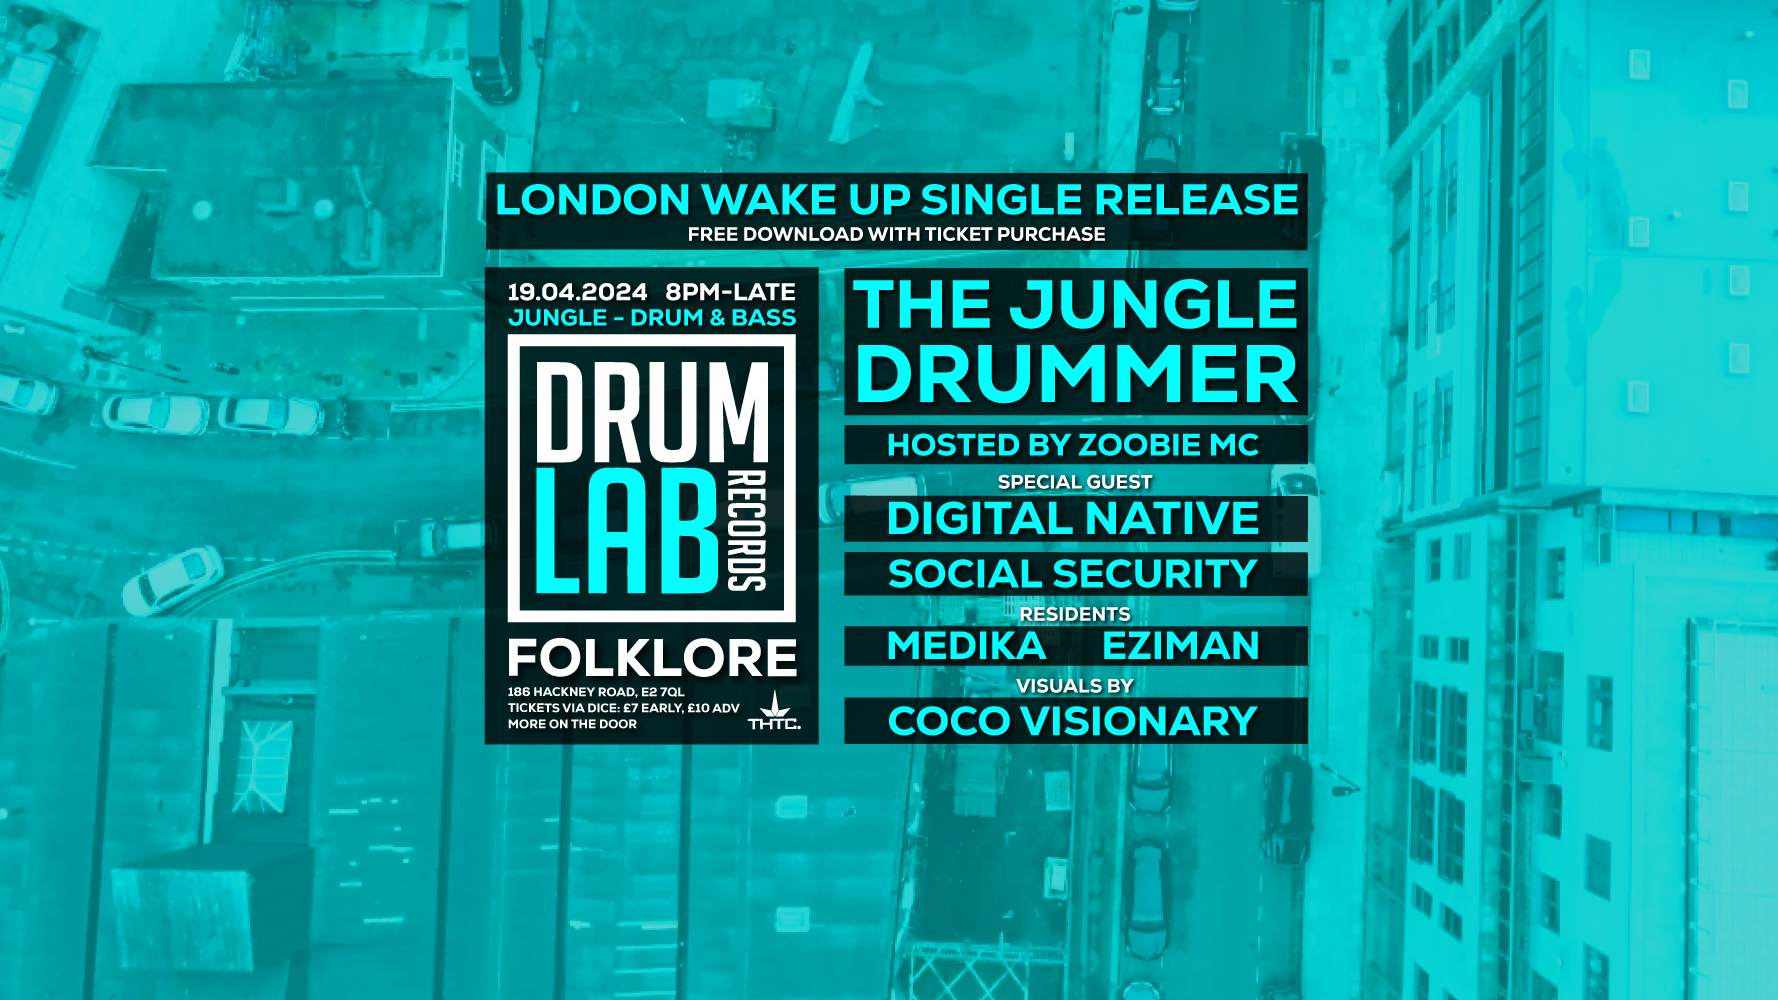 Drum Lab presents: Jungle Drummer London Wake Up Release - フライヤー裏